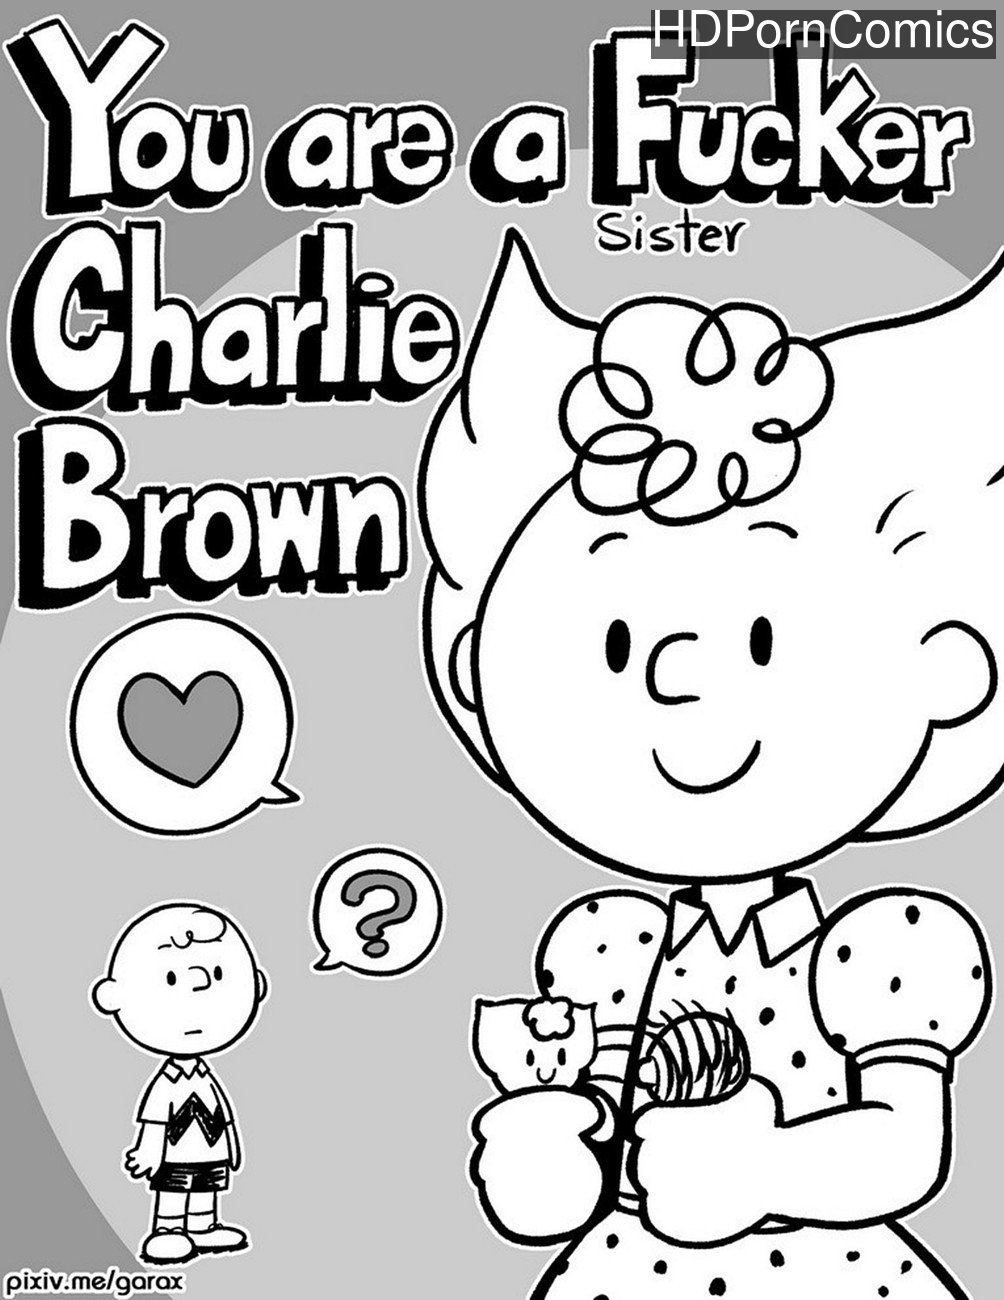 You Are A Sister Fucker Charlie Brown 1 comic porn â€“ HD Porn Comics